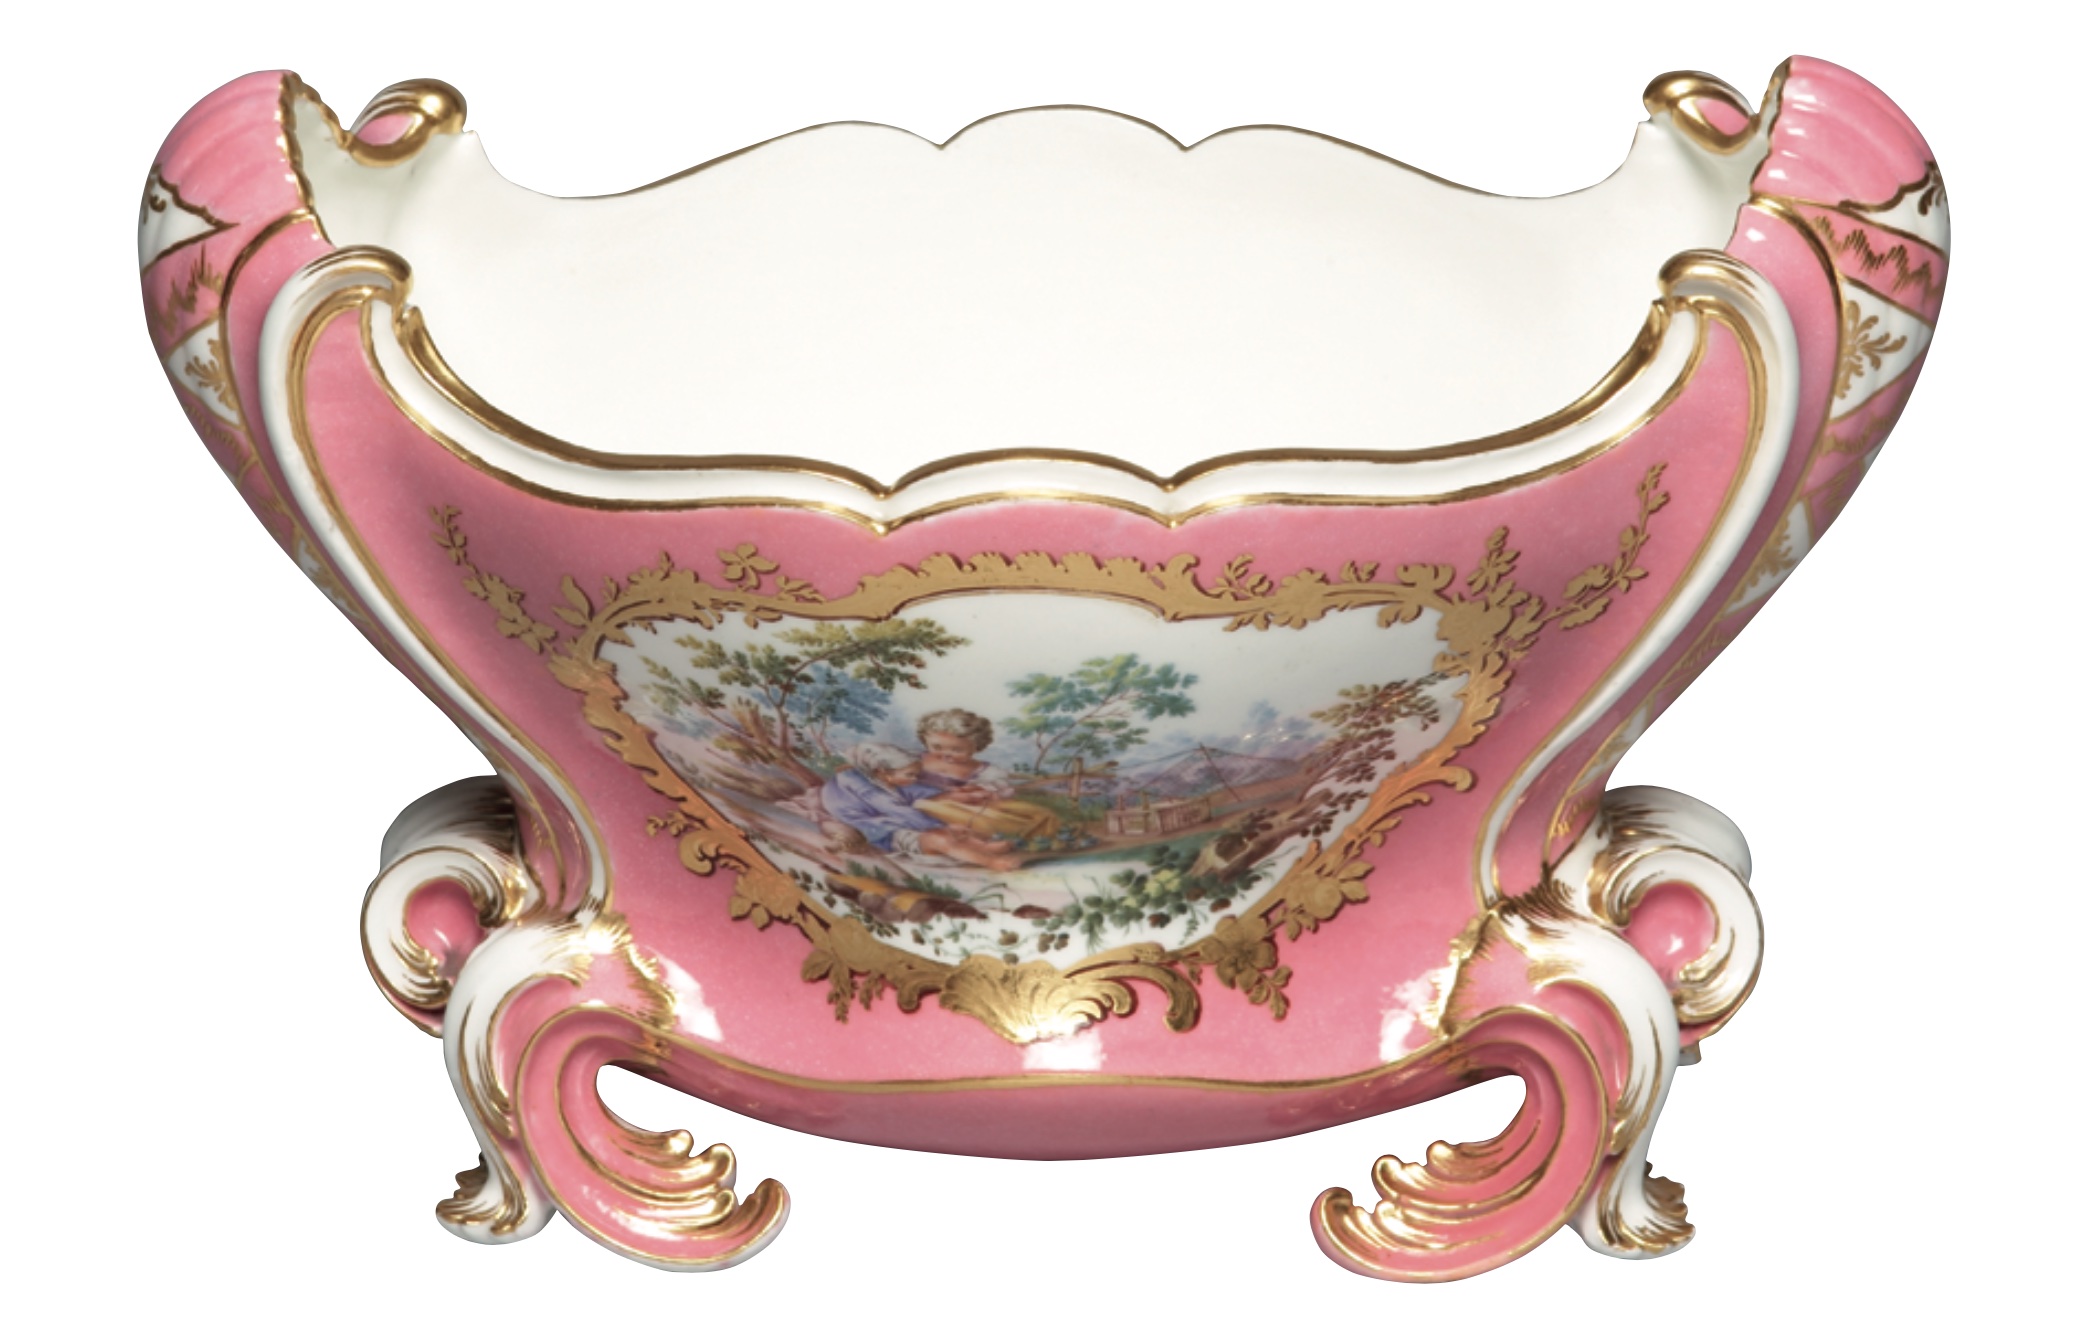 An antique Sèvres porcelain vase with rose ground